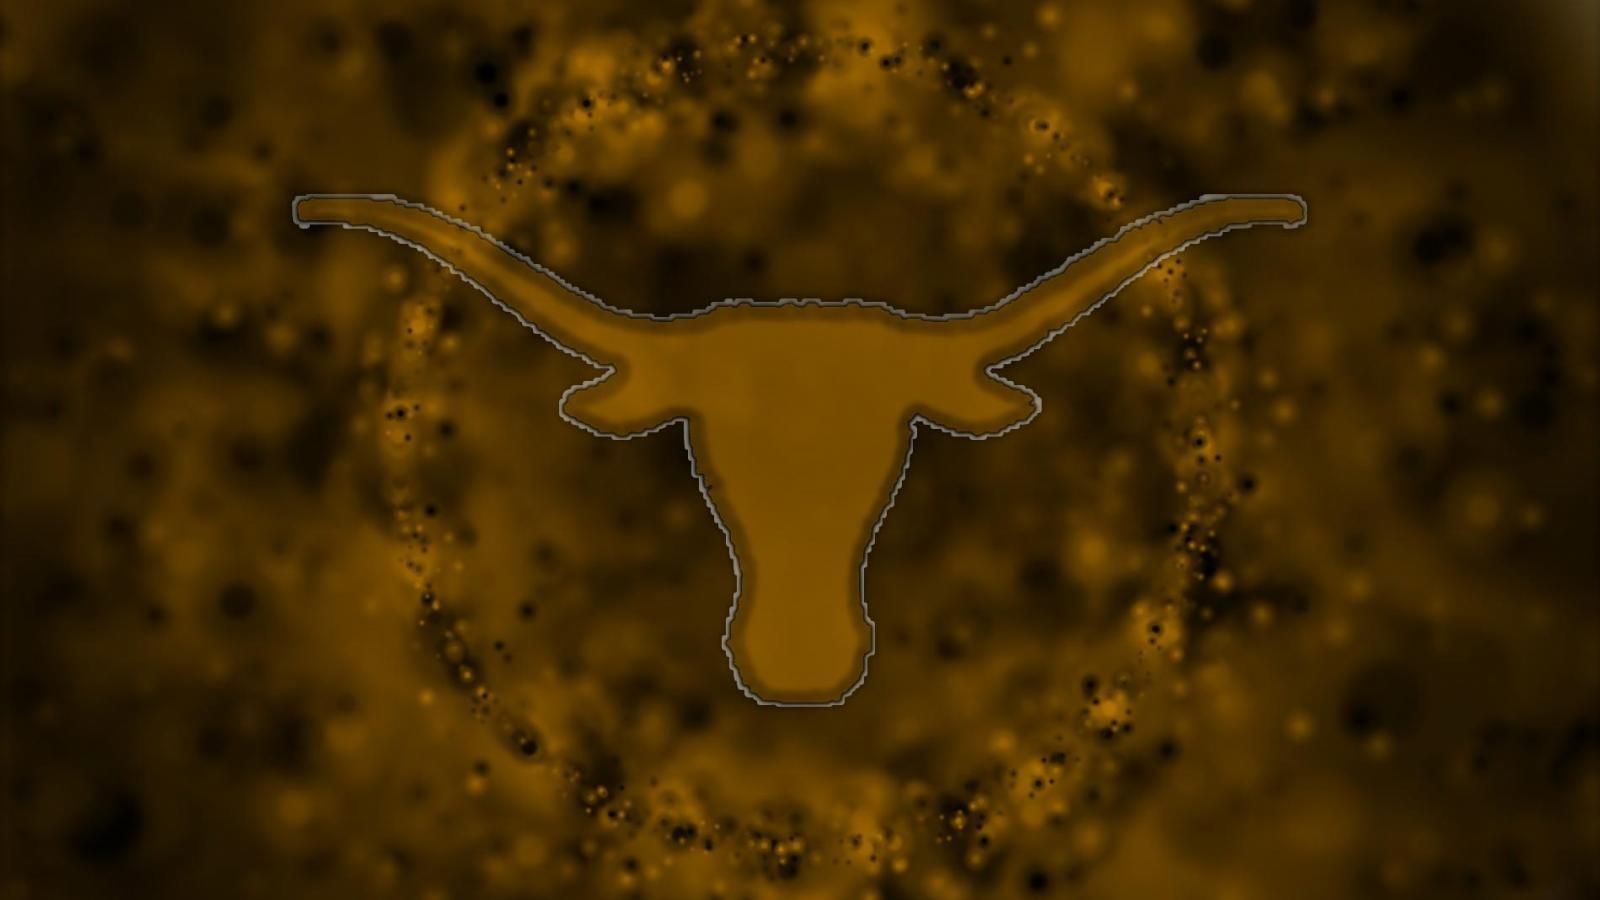 Wallpaper Texas Longhorns Logo Wallpapers